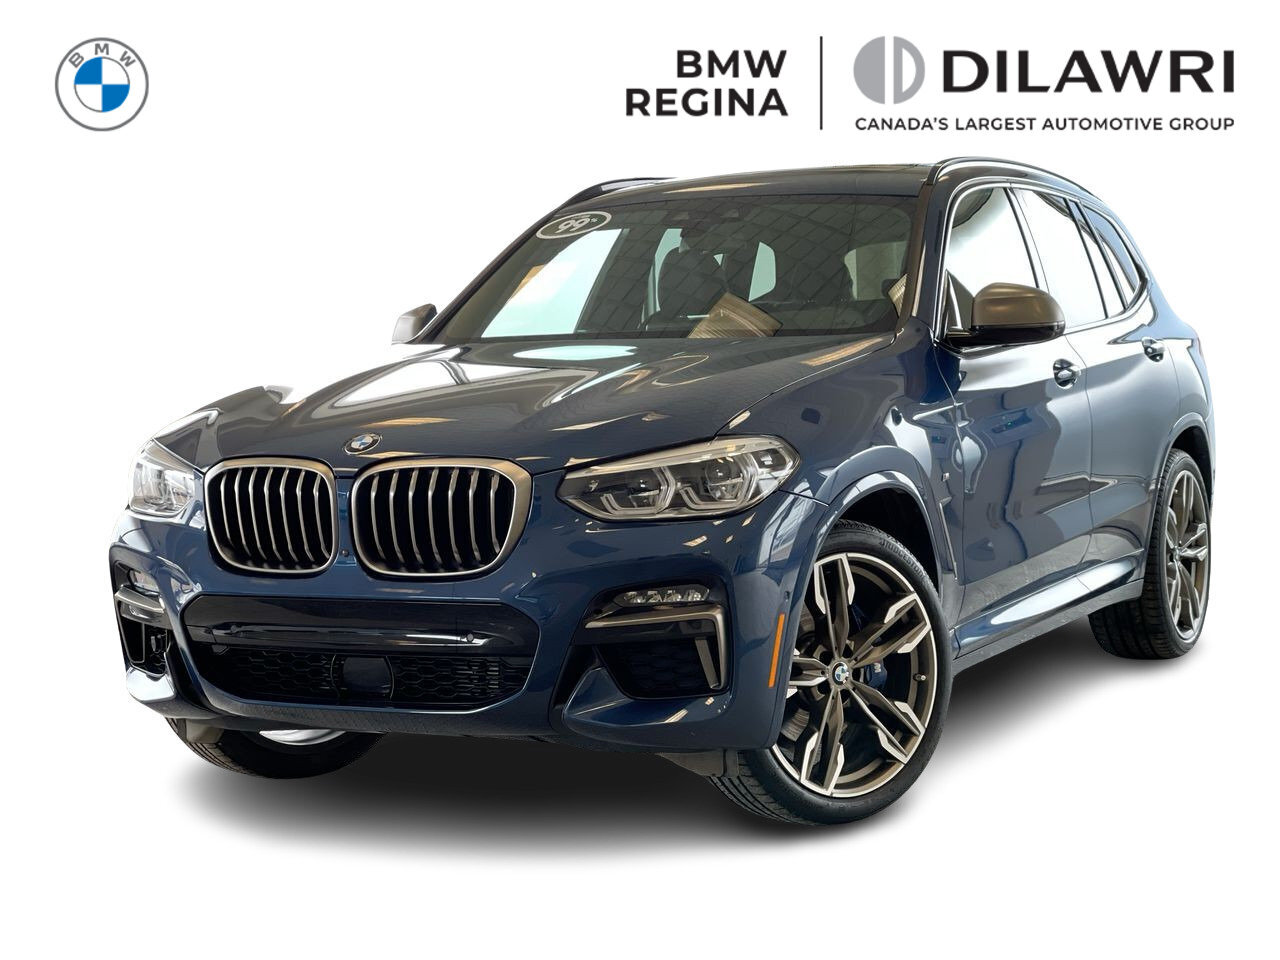 2021 BMW X3 M40i Premium Enhanced, 21 Wheels, Comfort Access /